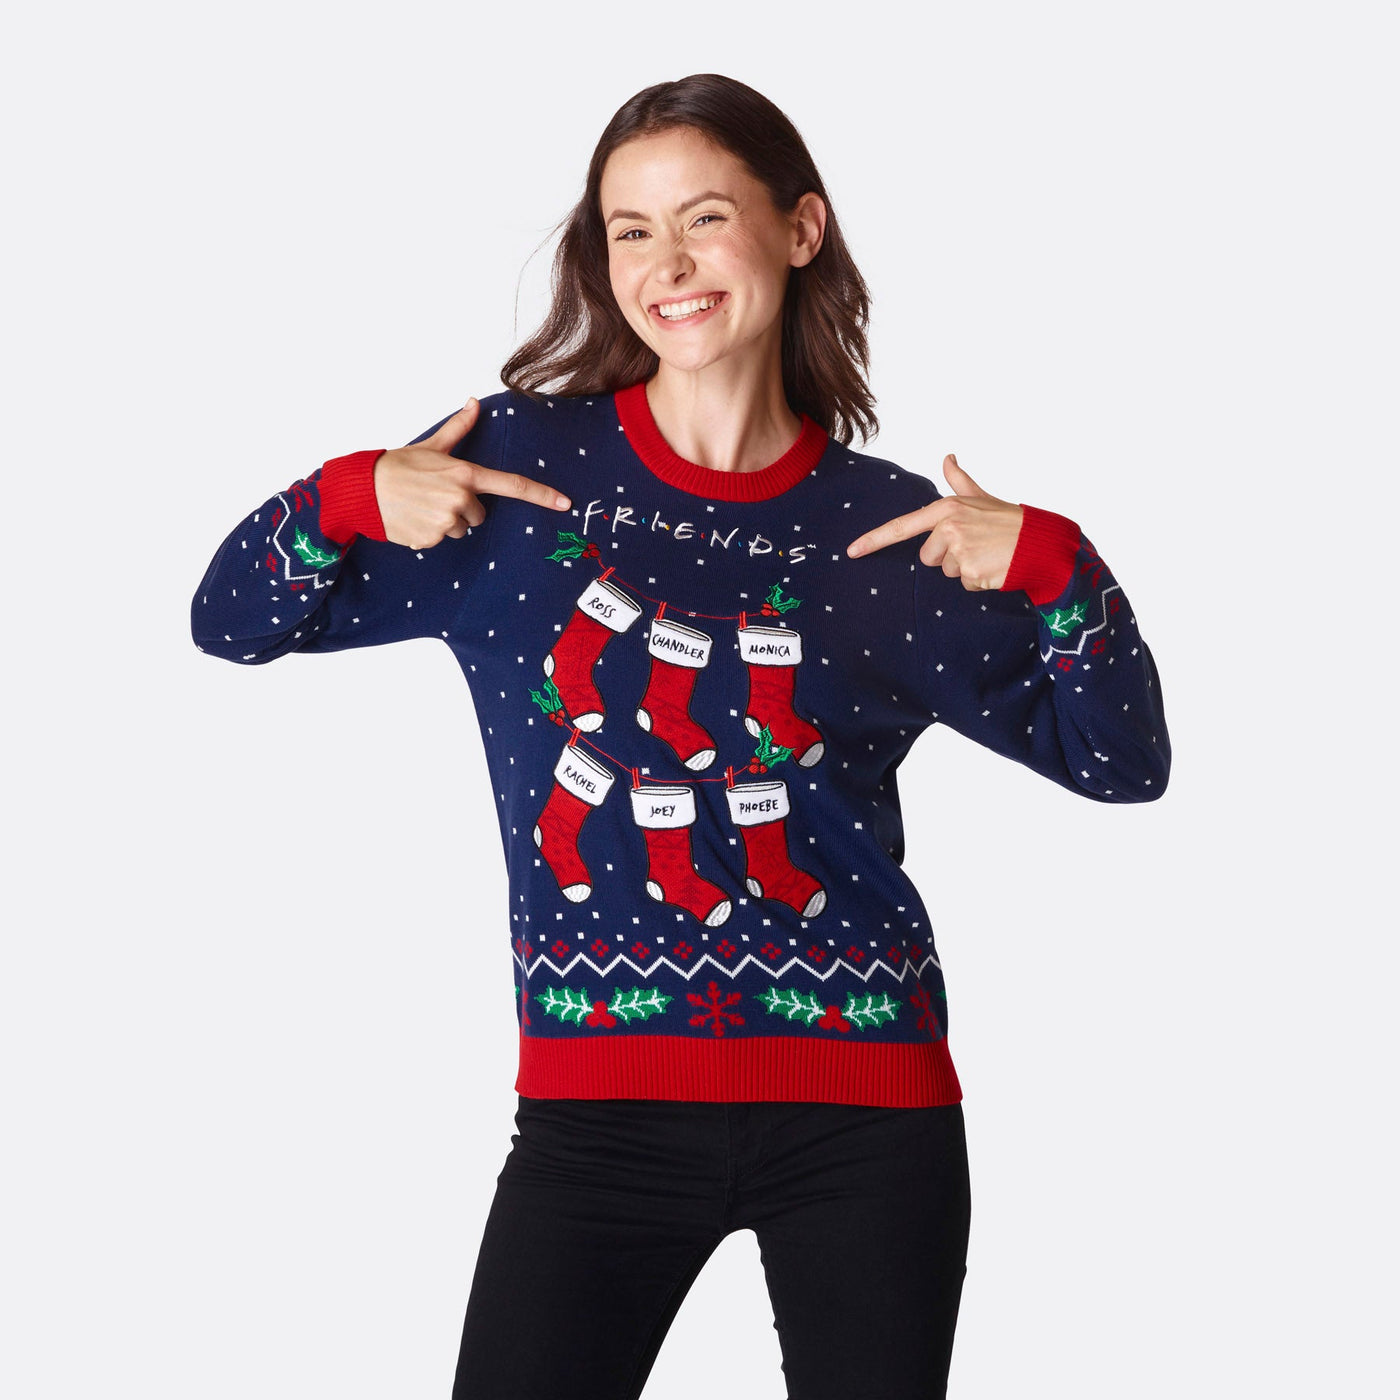 Women's Friends Christmas Sweater